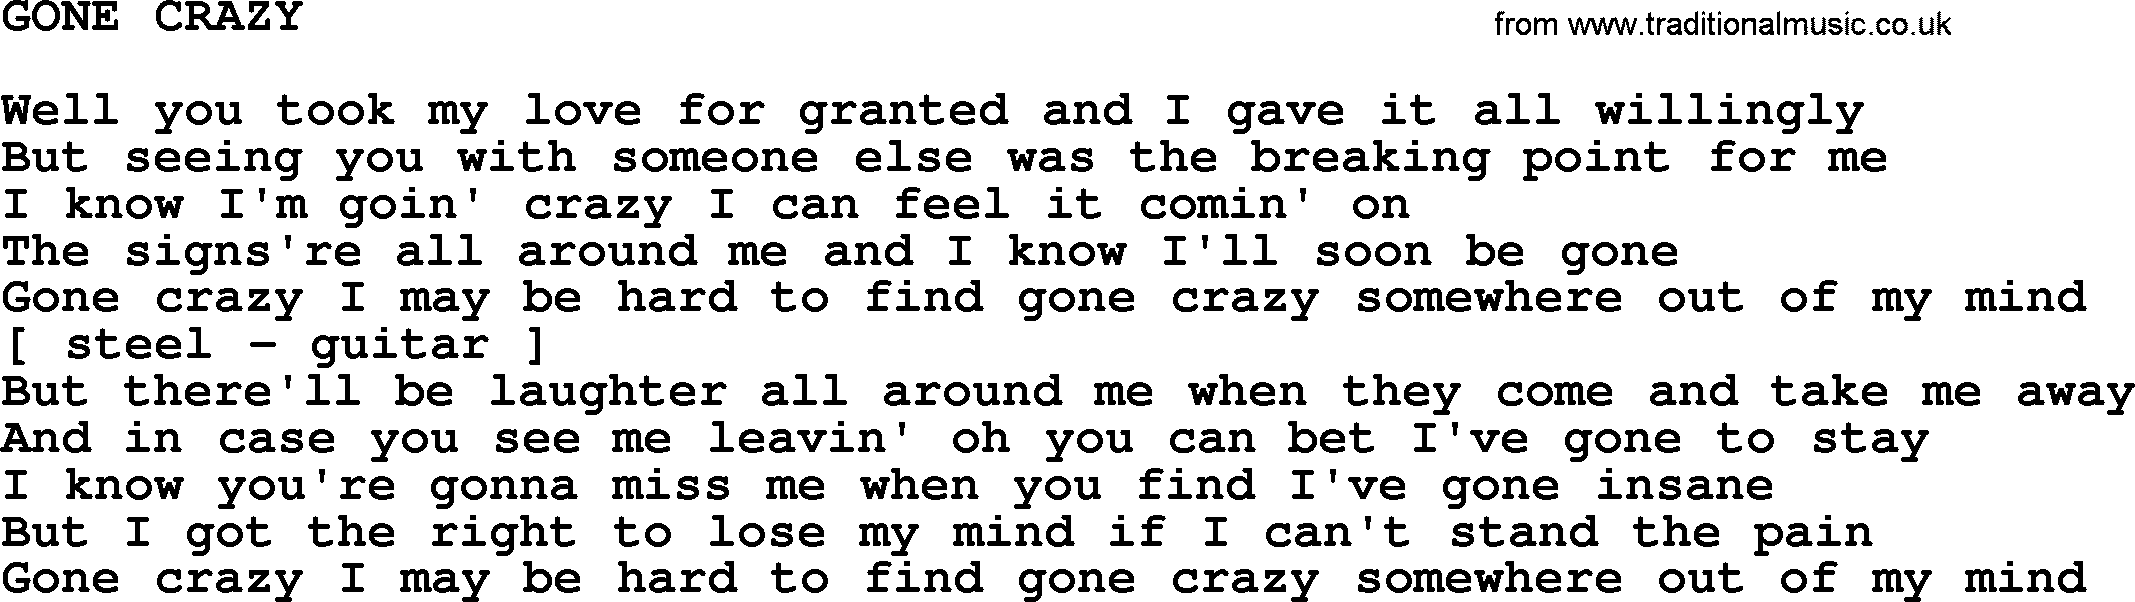 Merle Haggard song: Gone Crazy, lyrics.